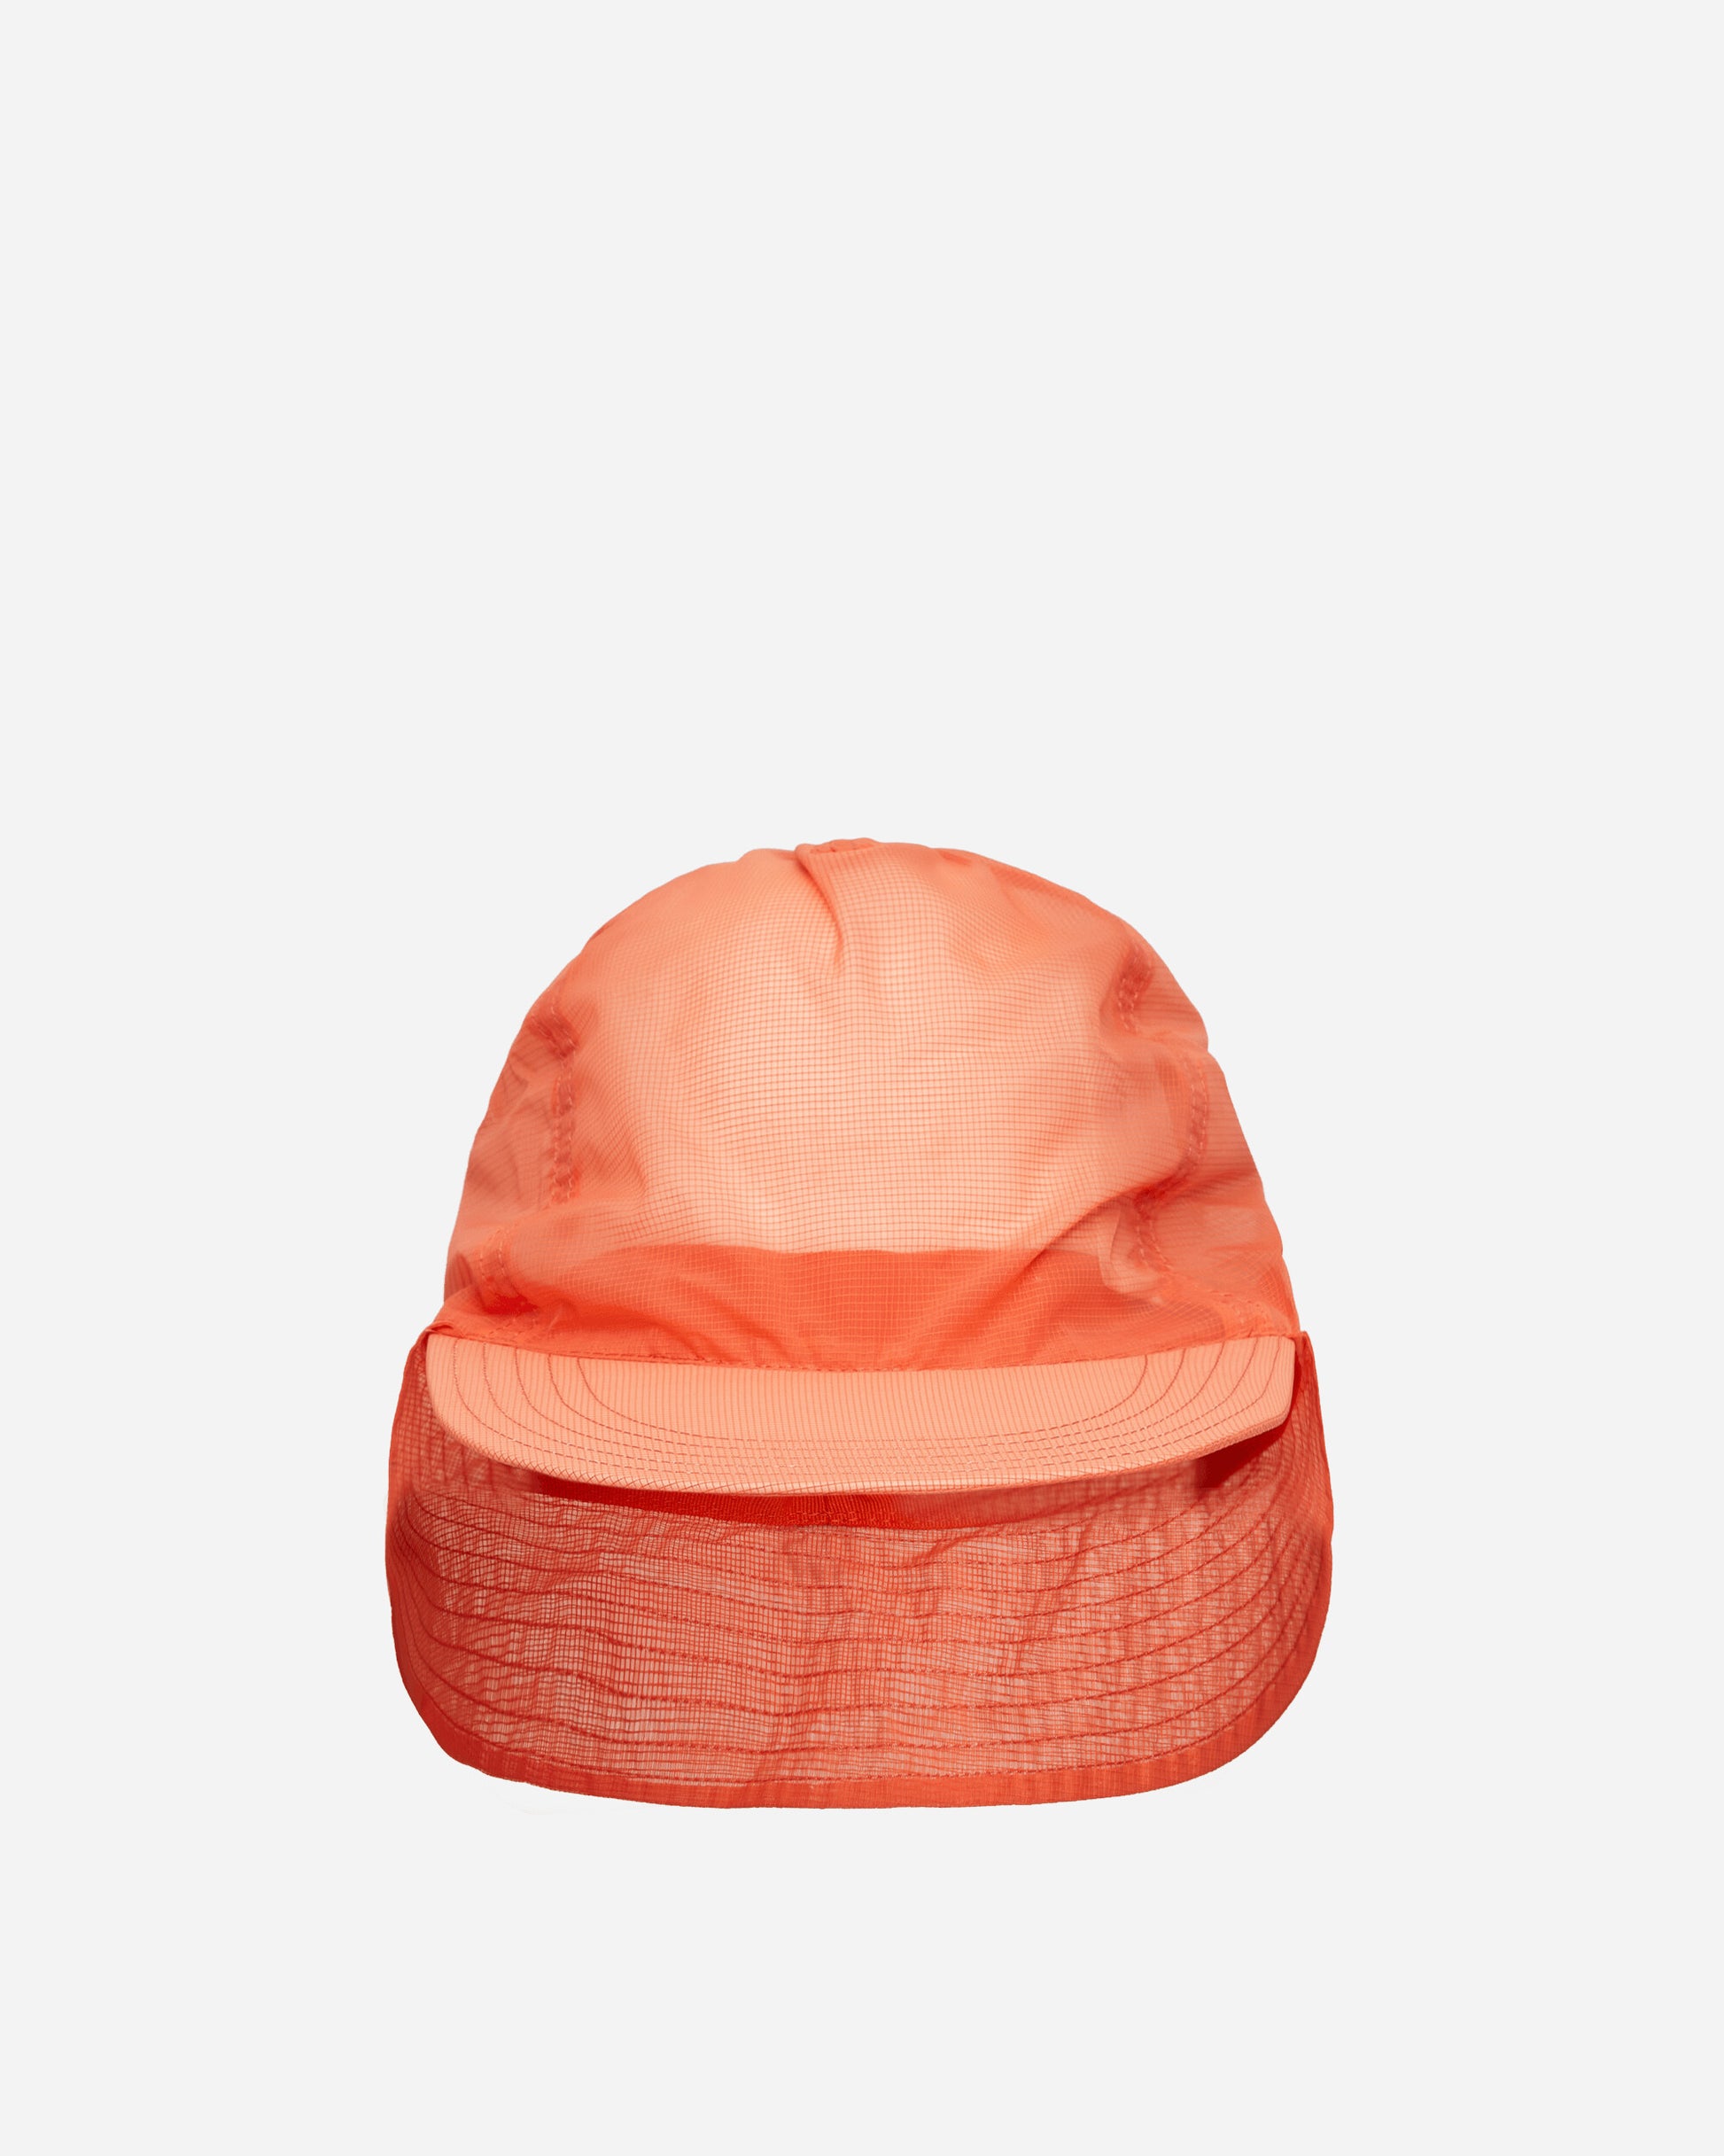 RANRA Der Cap Workwear Orange Hats Caps AMSS24HA01547165  2164